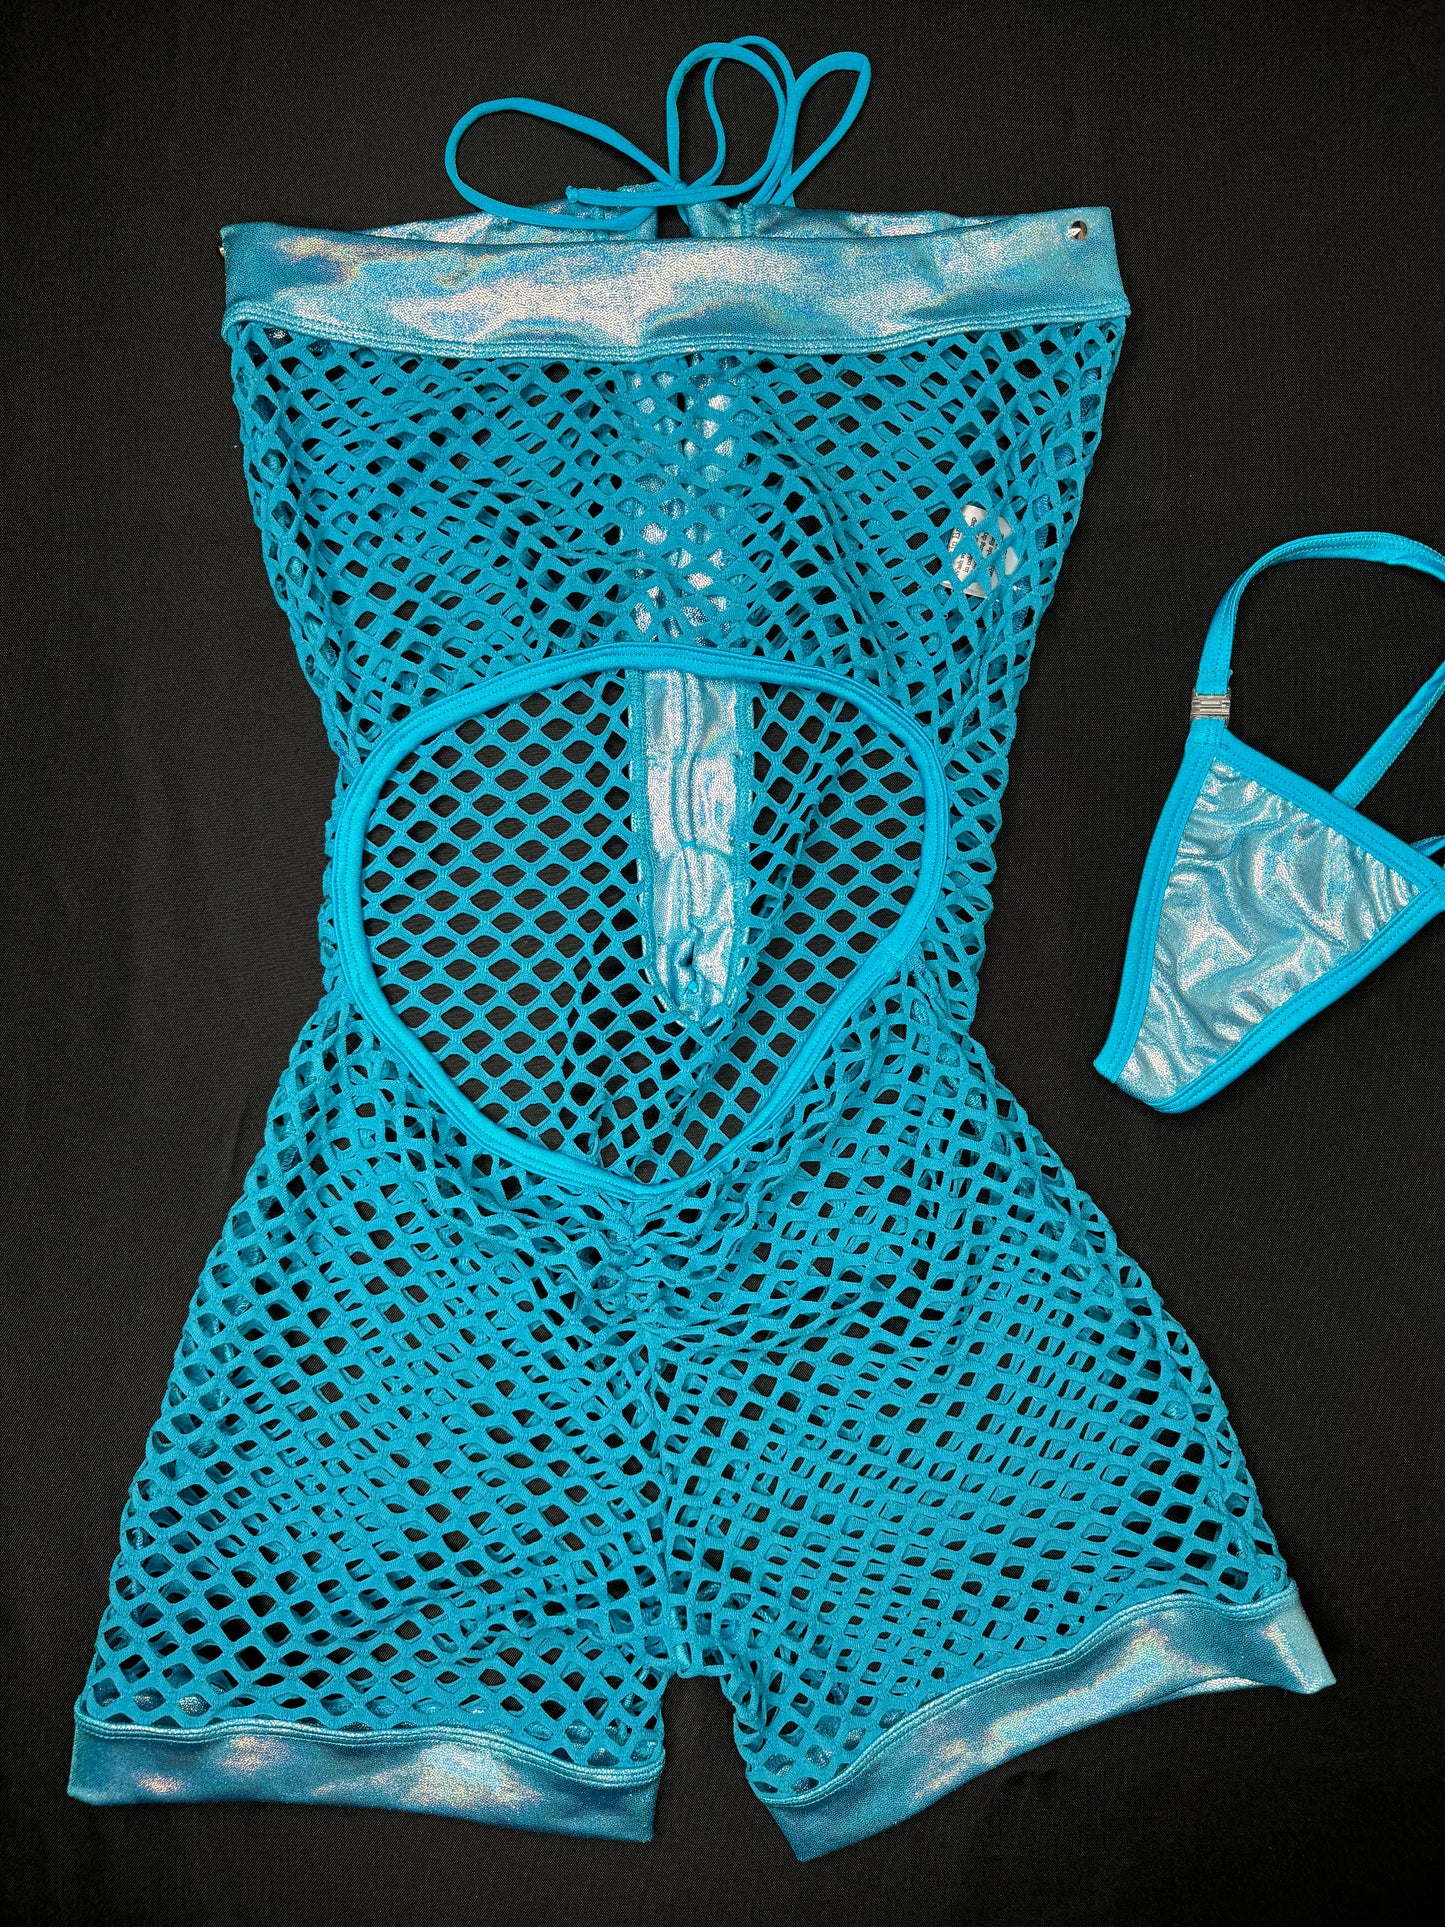 Mystic Blue/Turquoise FishnetOne-Piece Lingerie Outfit